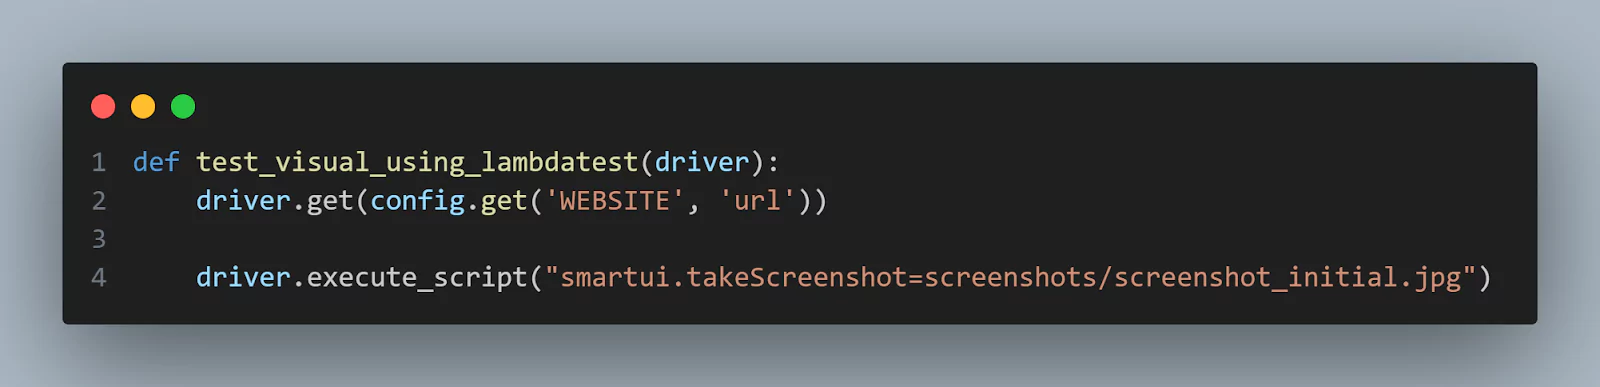 executes a JavaScript command to take an initial screenshot